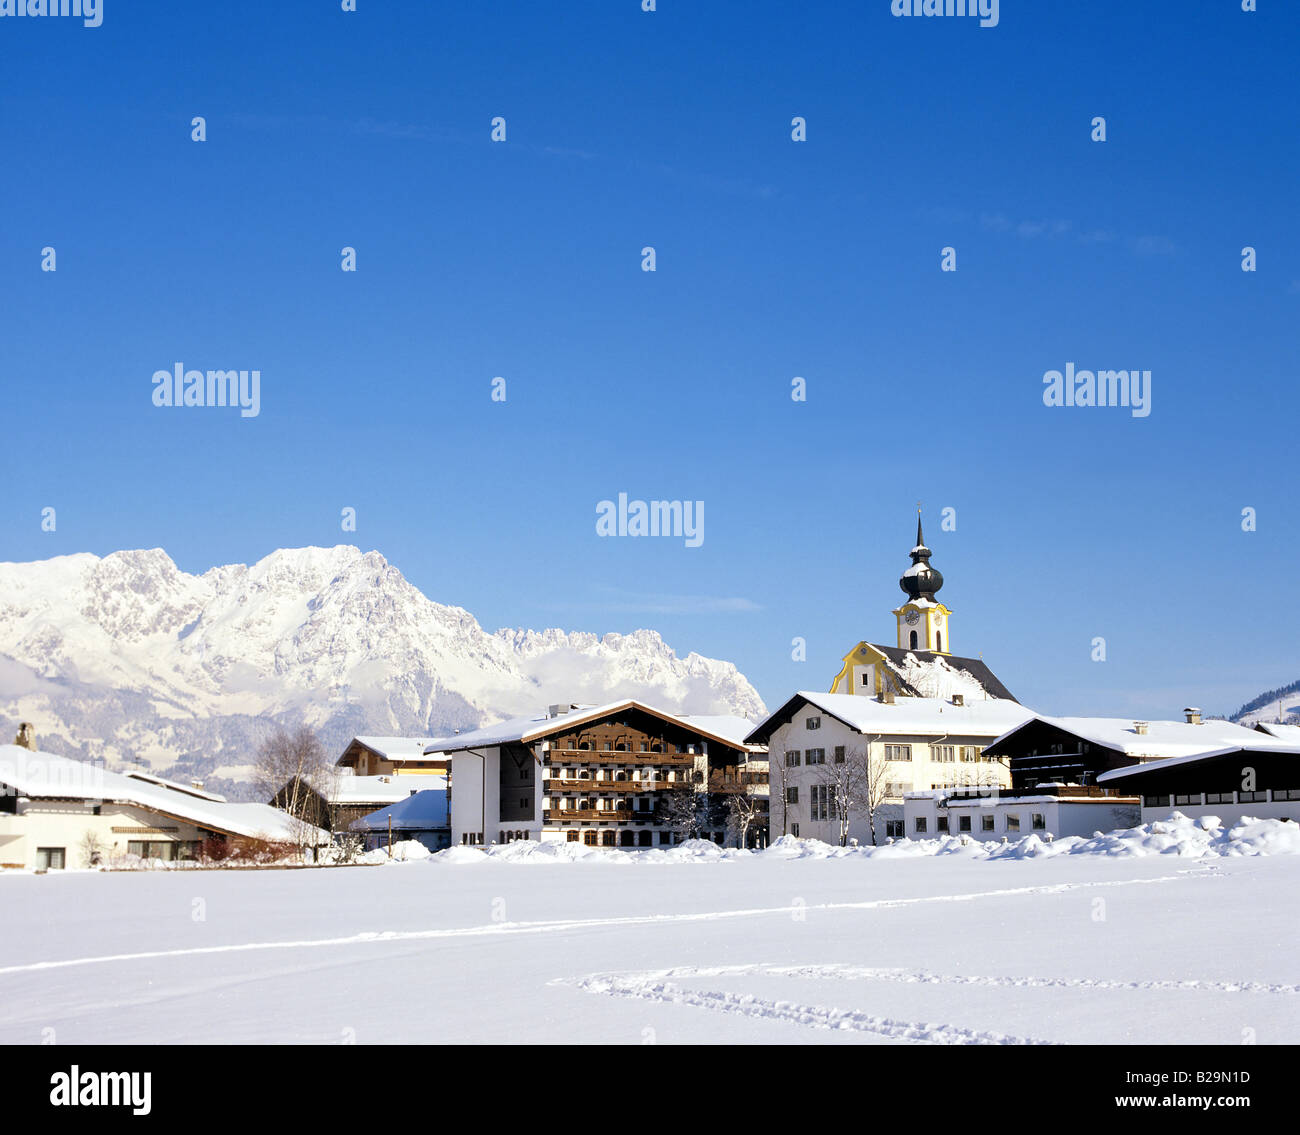 Soll Tirol Austria Ref WP STRANGE 3749 COMPULSORY CREDIT World Pictures Photoshot Stock Photo